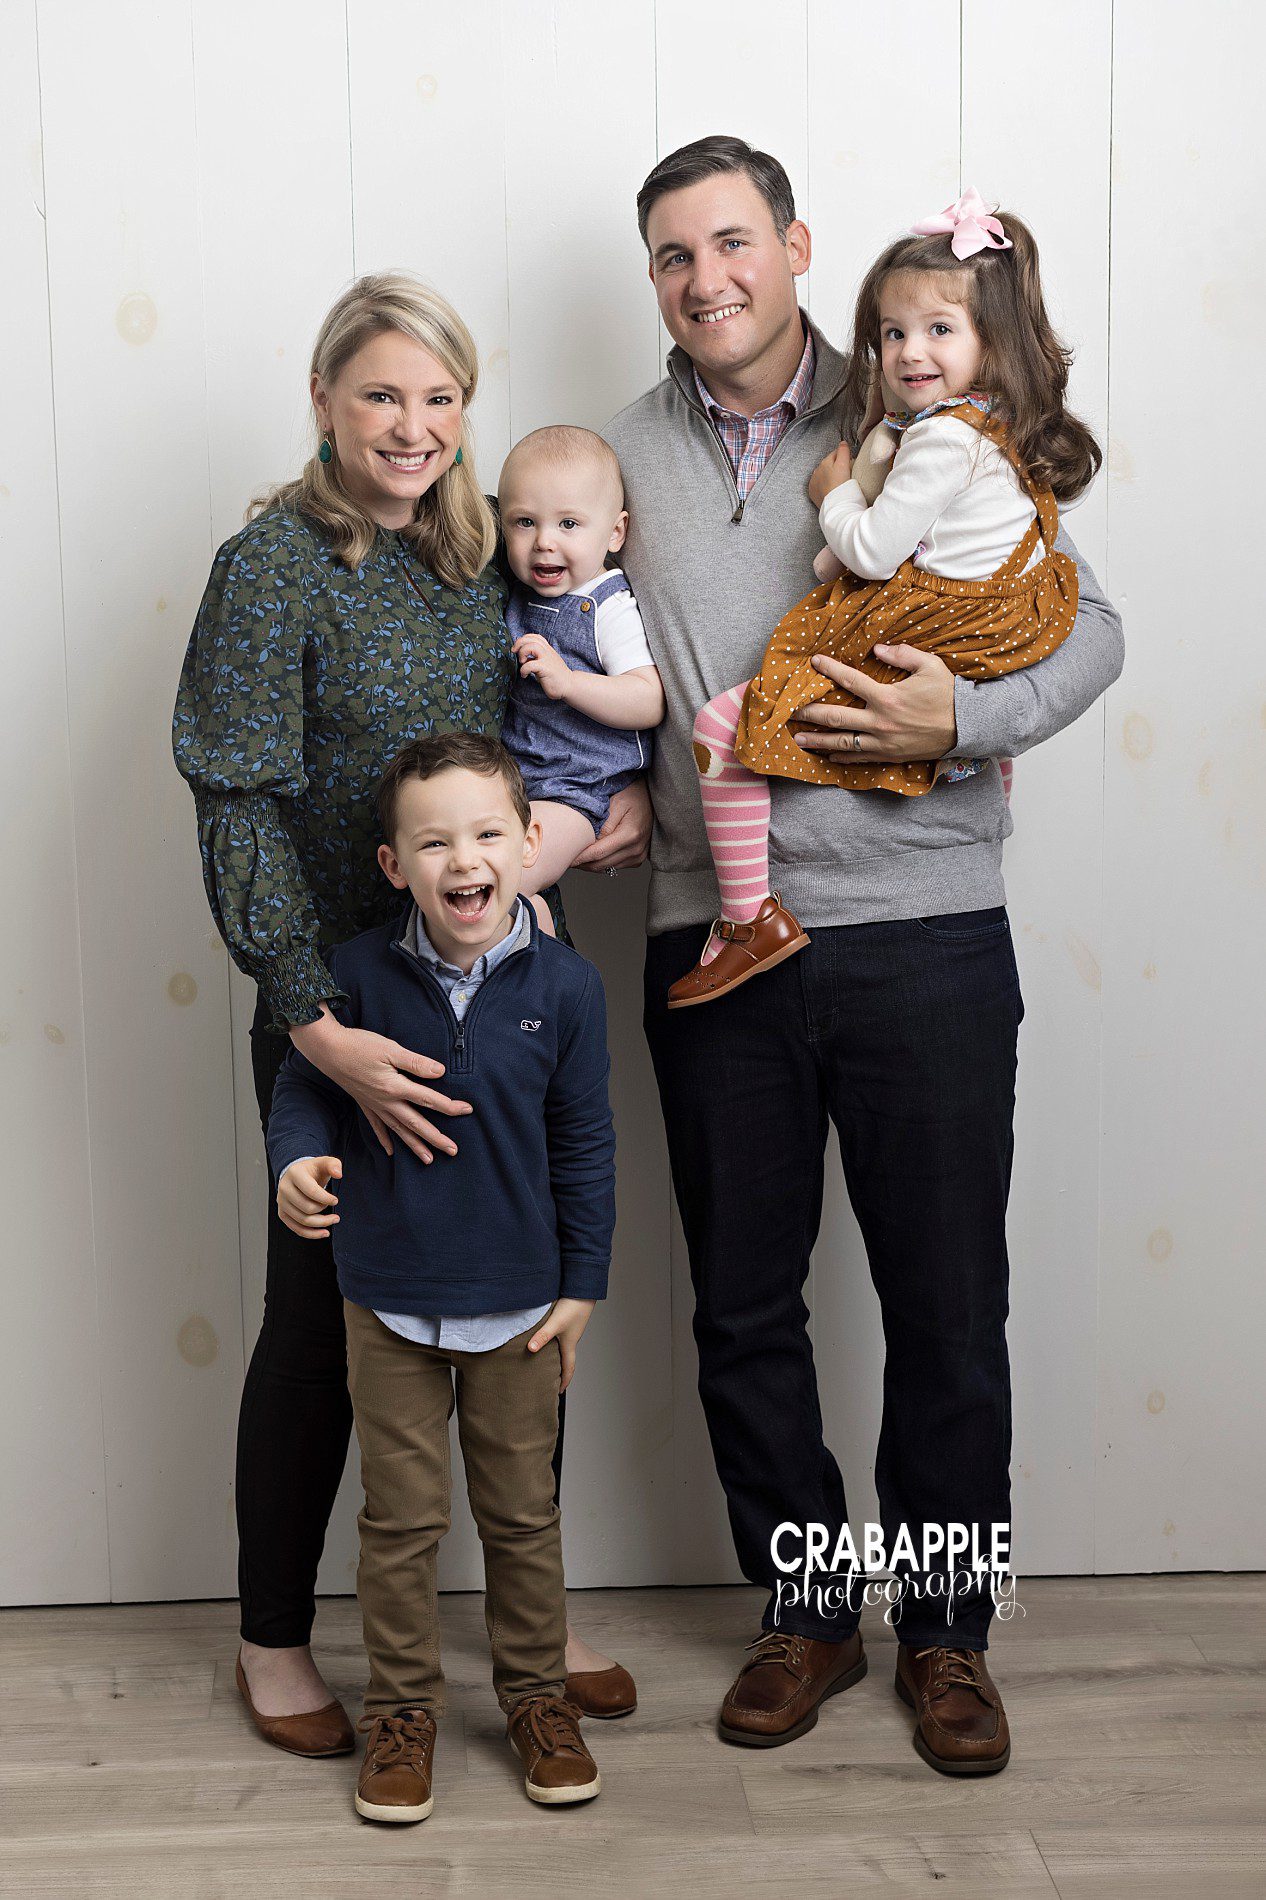 Family portrait ideas with three kids